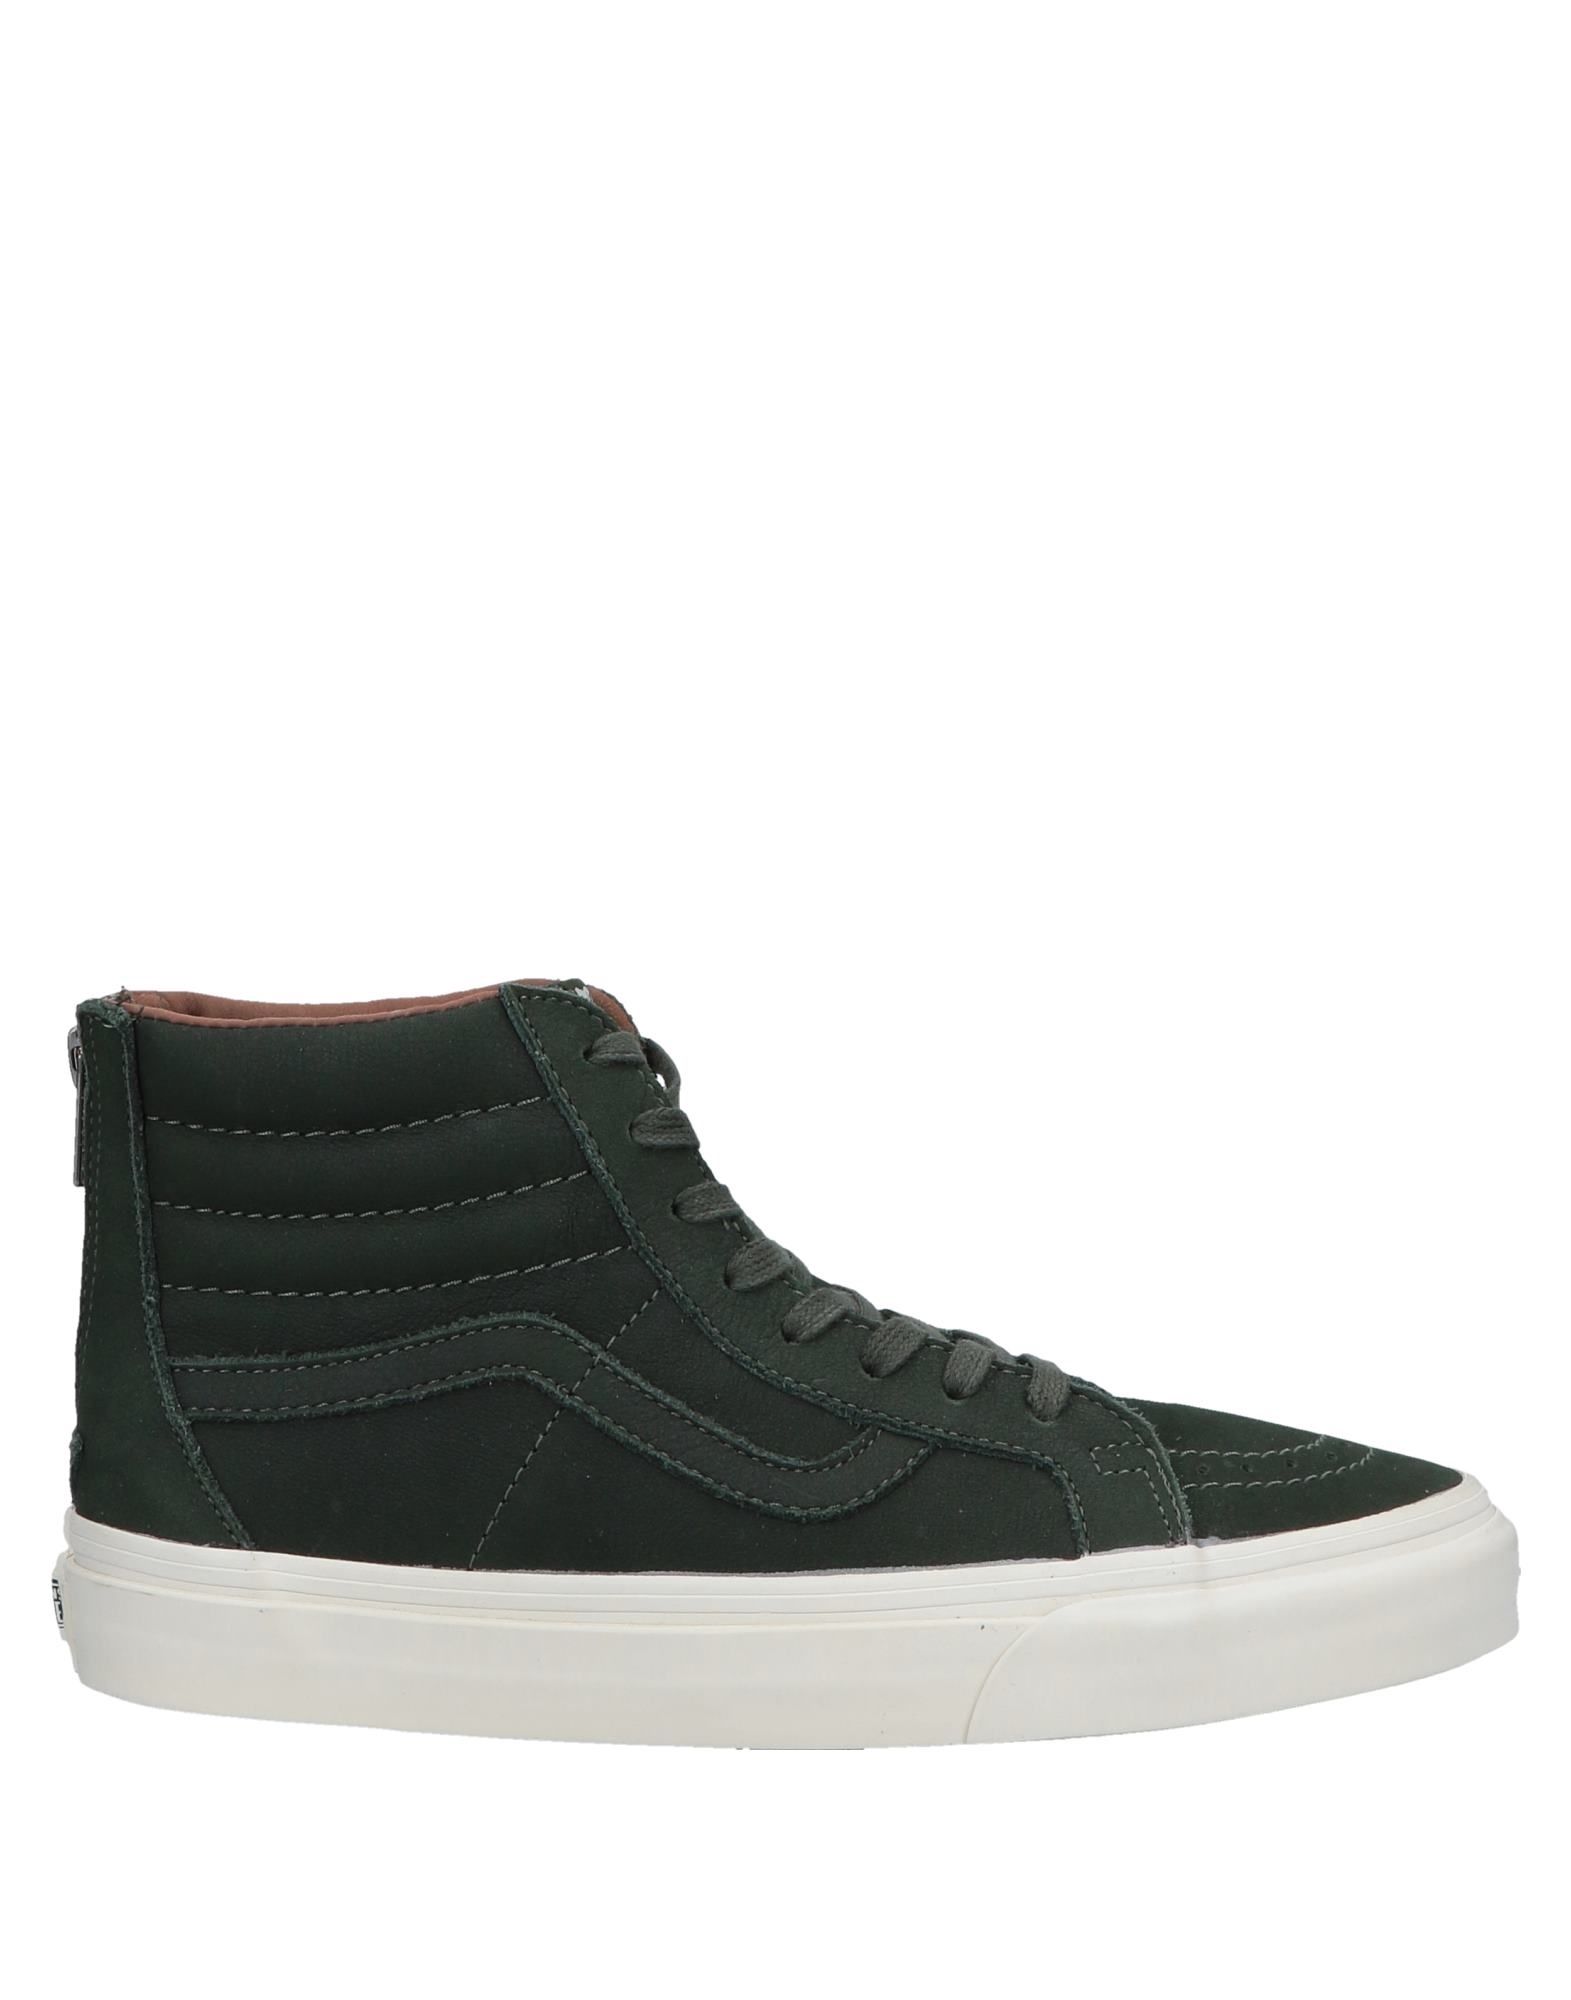 Shop Vans Man Sneakers Dark Green Size 8.5 Soft Leather